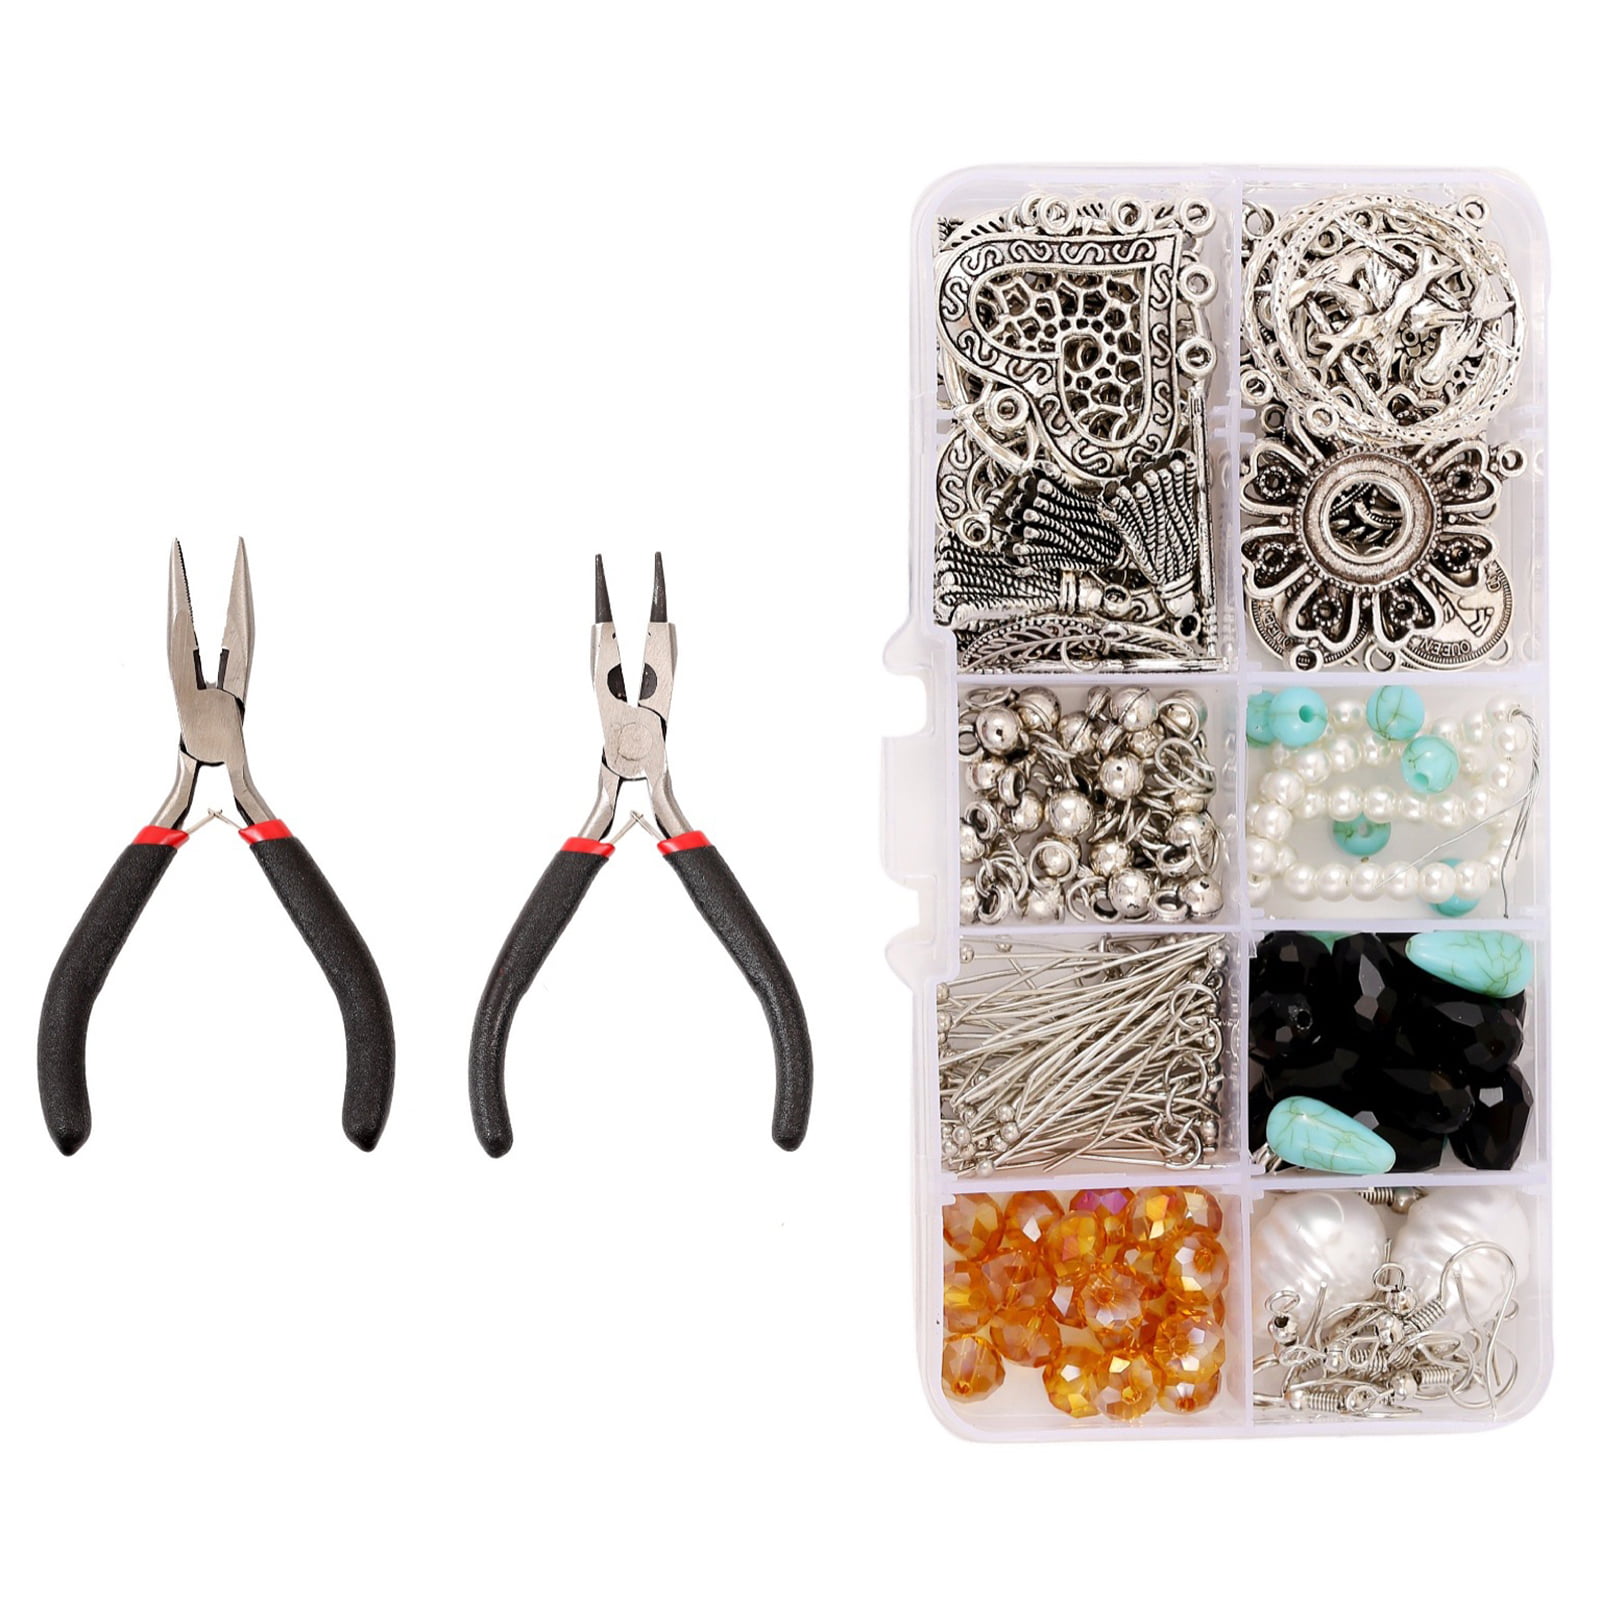 915PCS Earring Jewelry Making Kit Pliers Repair Tool Craft Supplies Starter  Set 